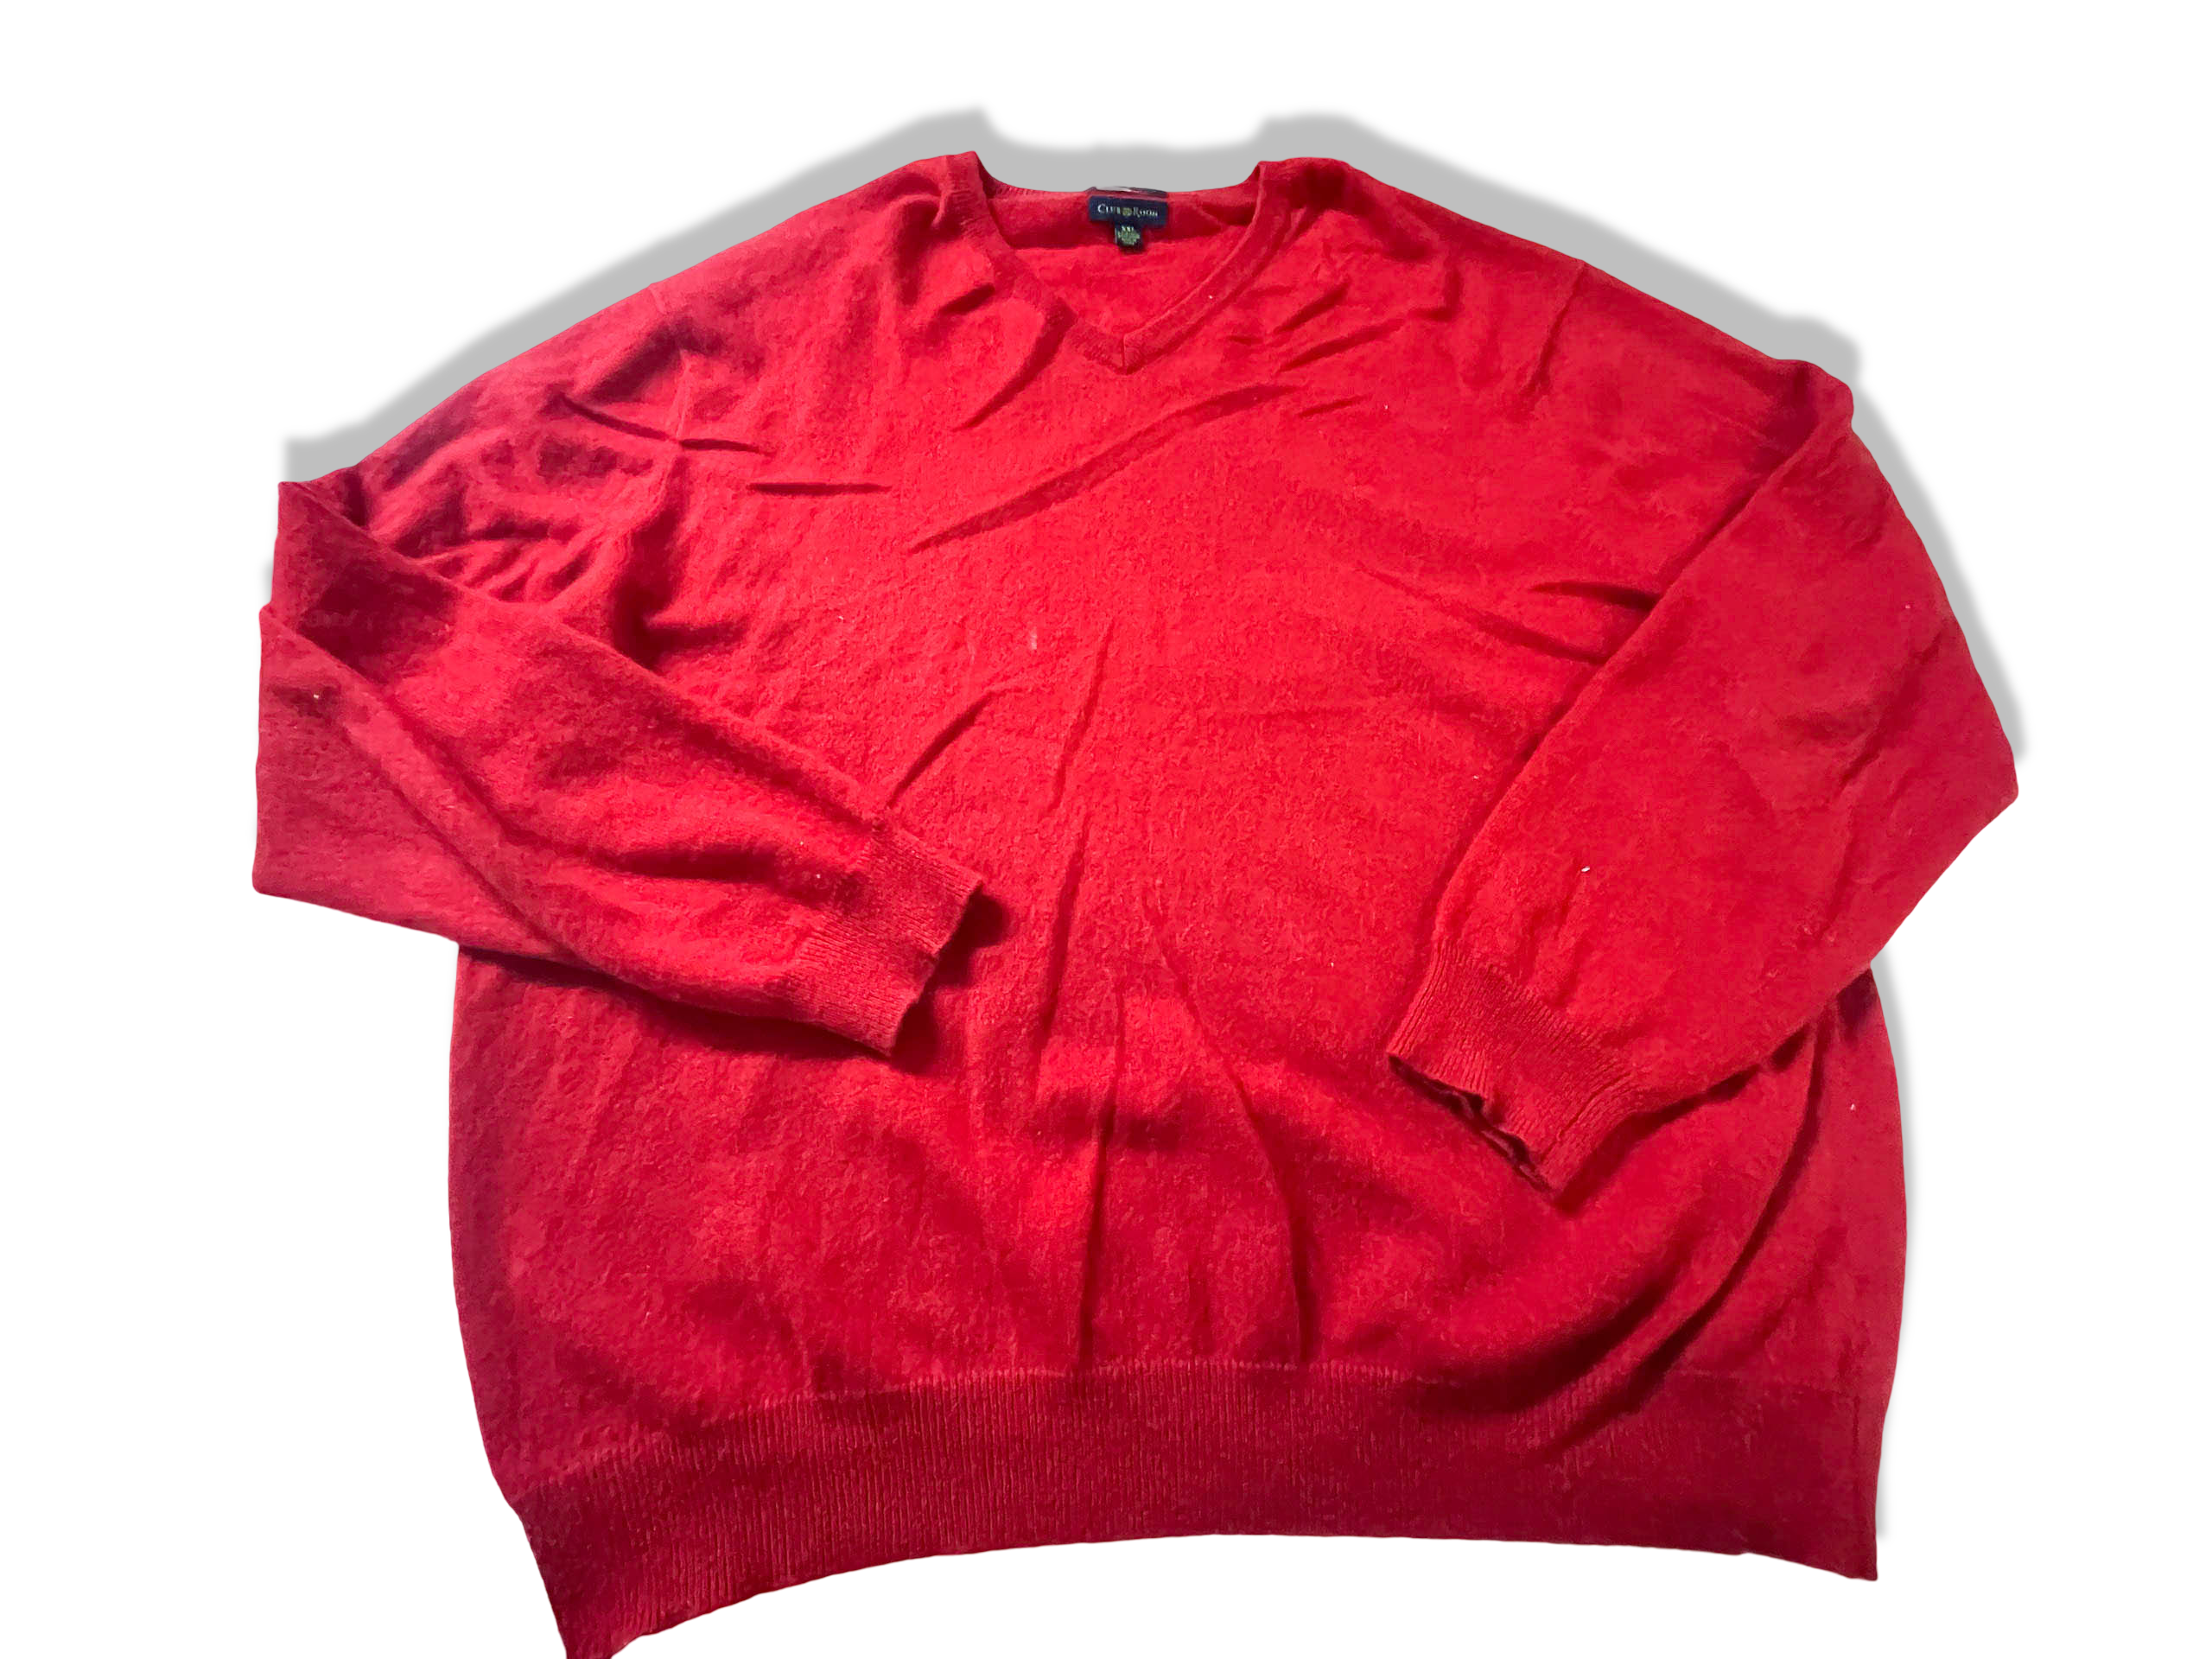 Vintage Men's red Club & room estate cashmere V-neck sweatshirt in XXL|L29W27|SKU 3923